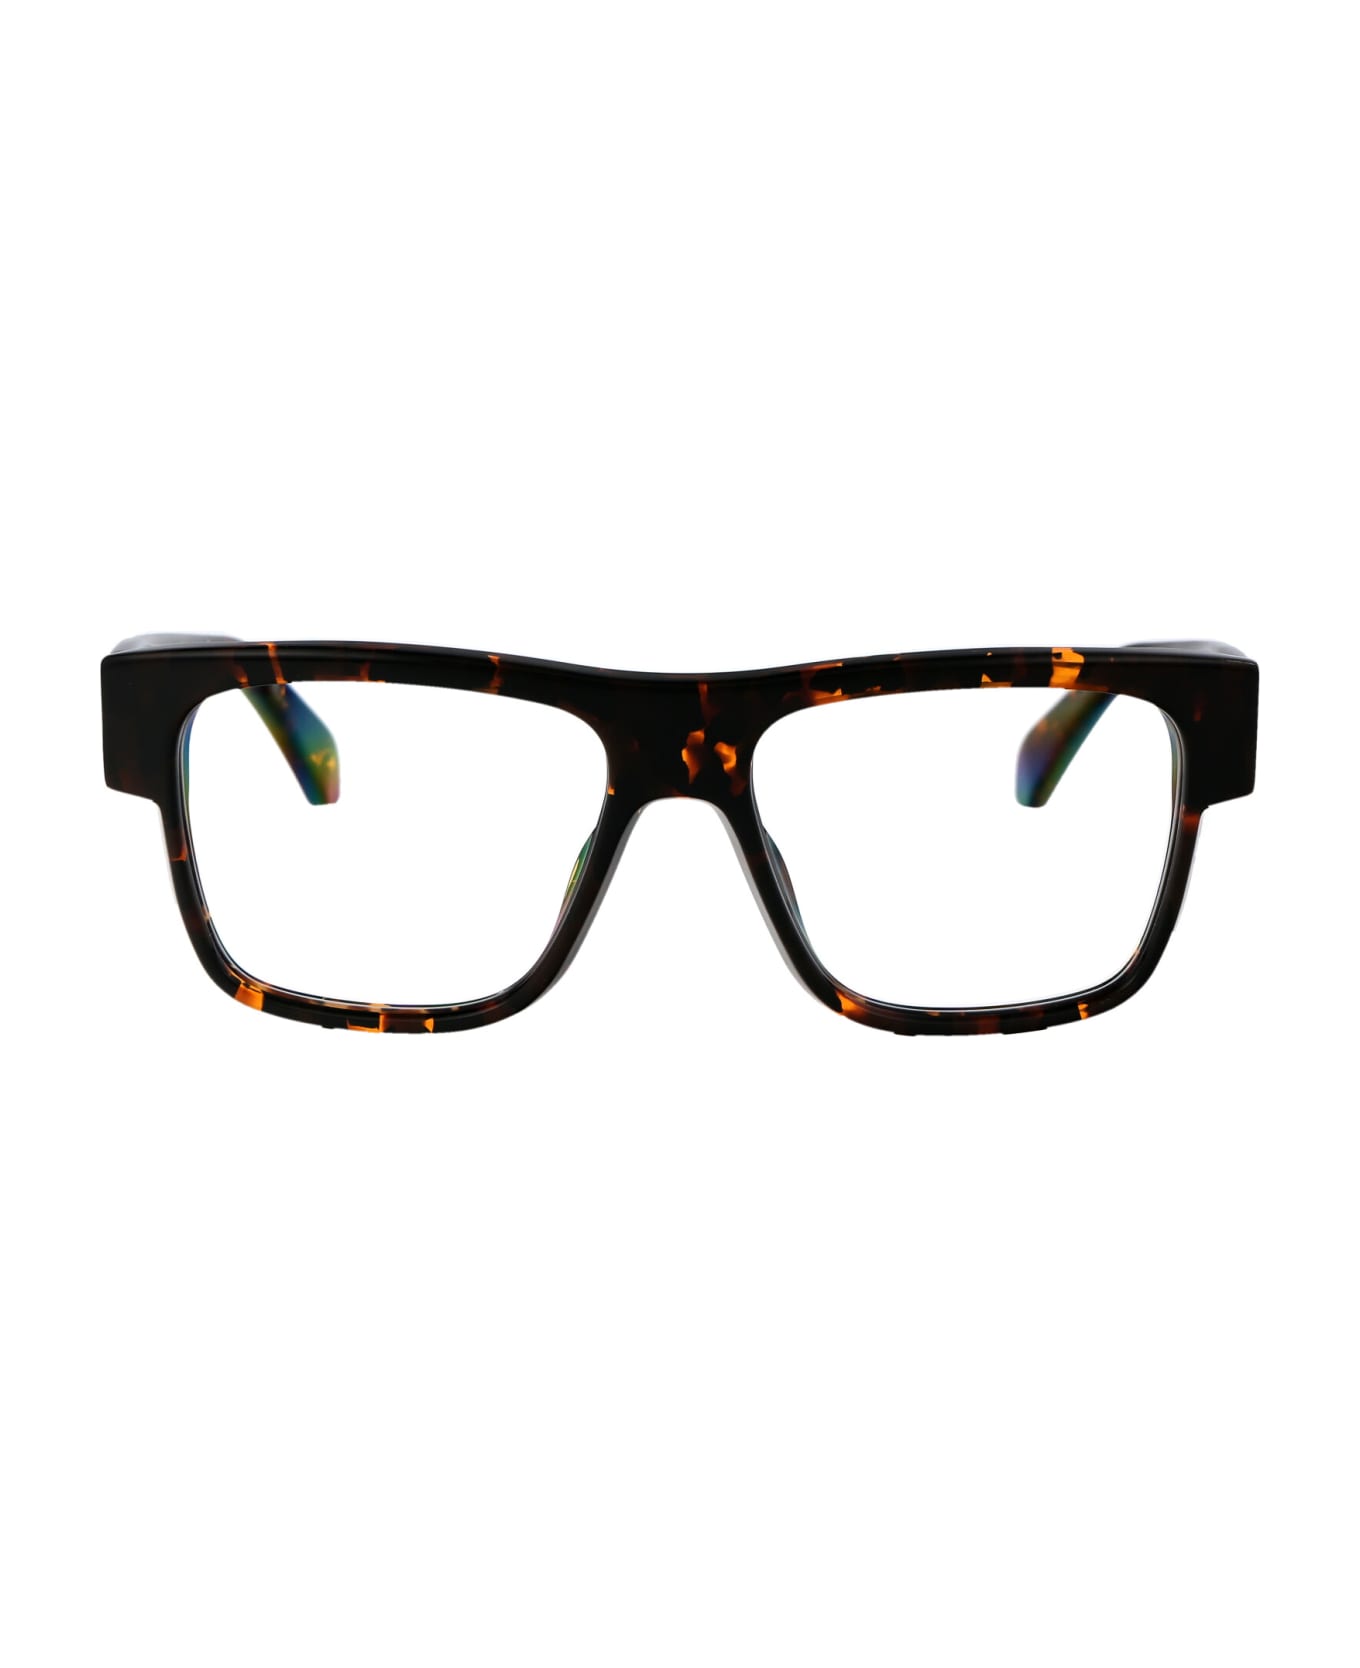 Off-White Optical Style 60 Glasses - 6000 HAVANA アイウェア